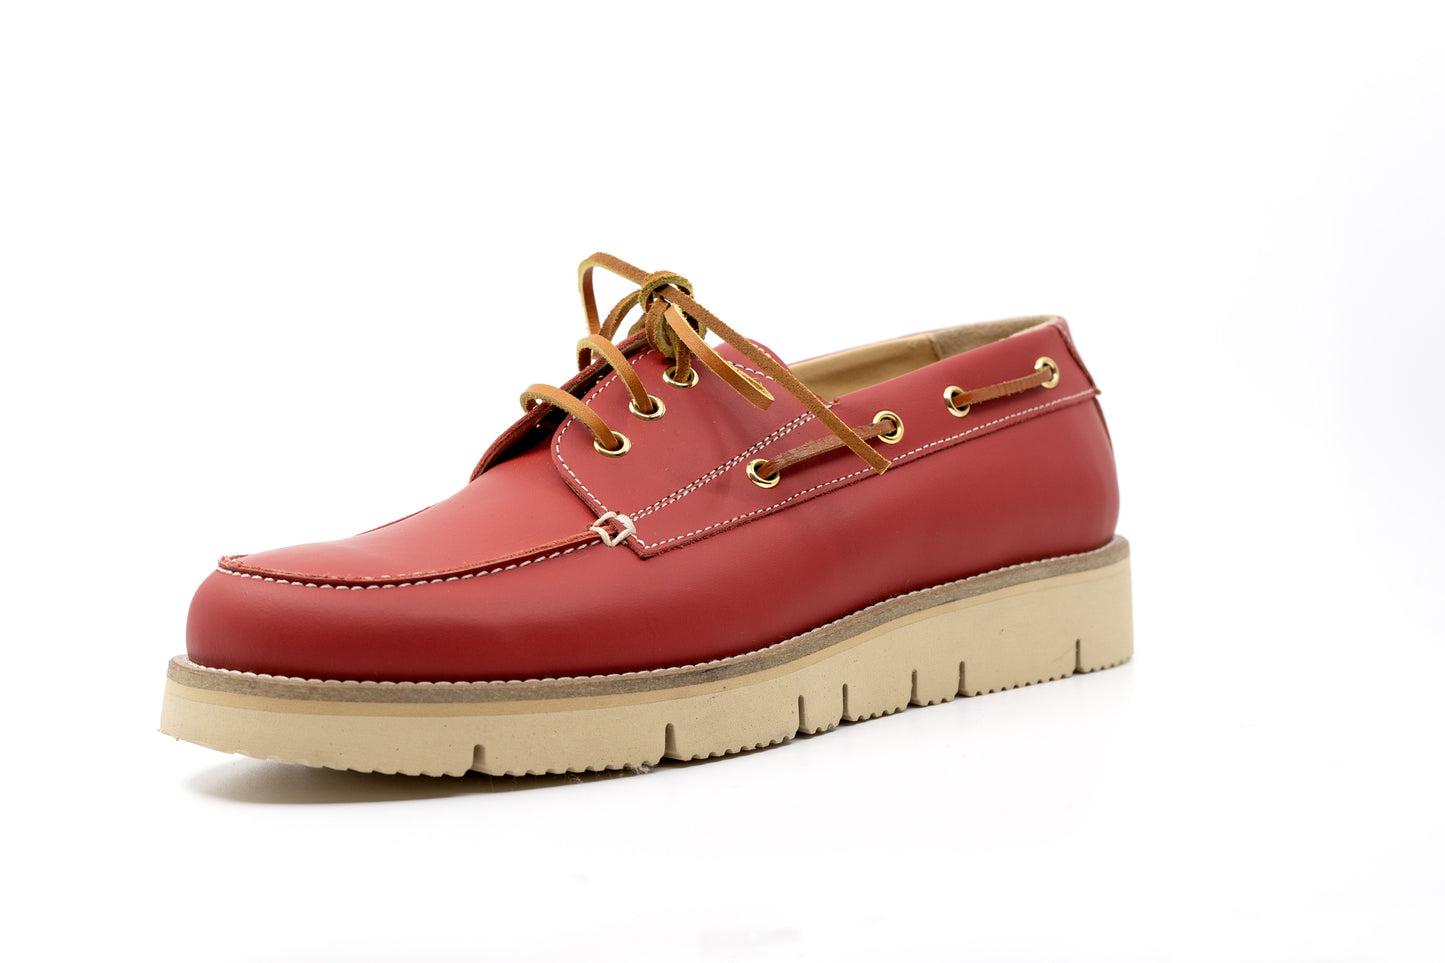 Hopkins Men's Boat Shoes - Red